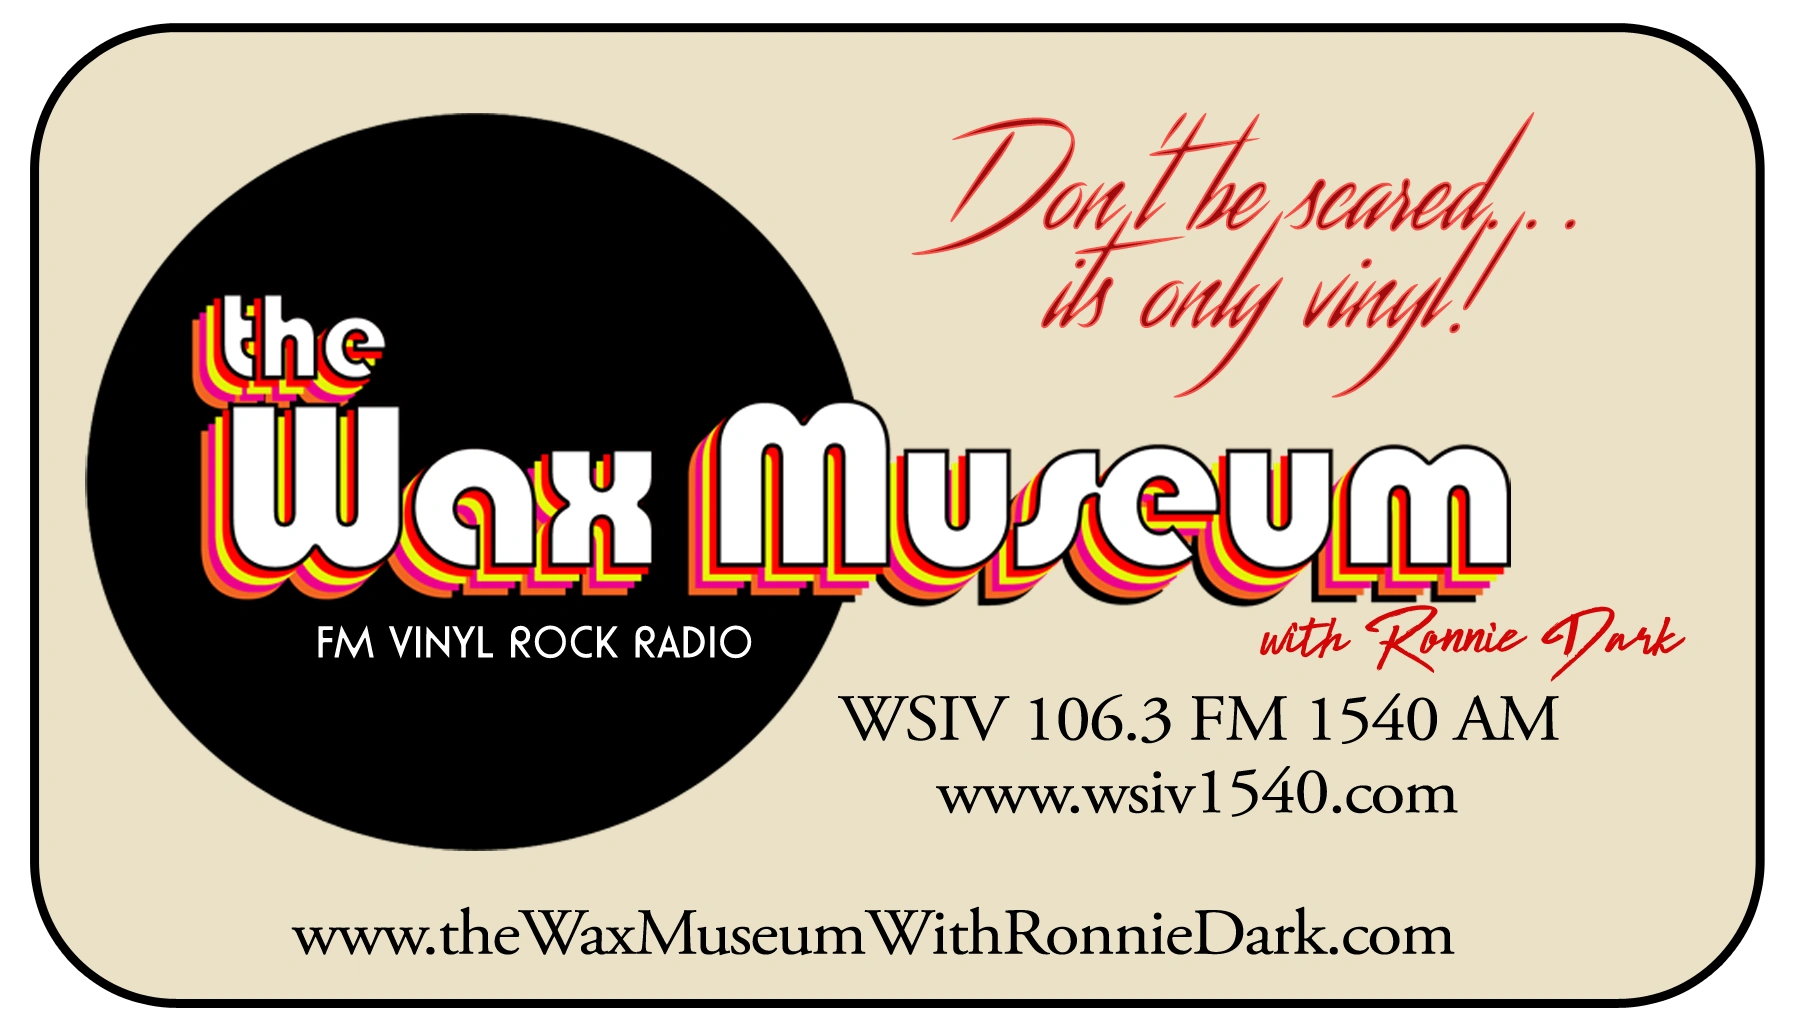 The Wax Museum 
with Ronnie Dark

FM VINYL ROCK RADIO